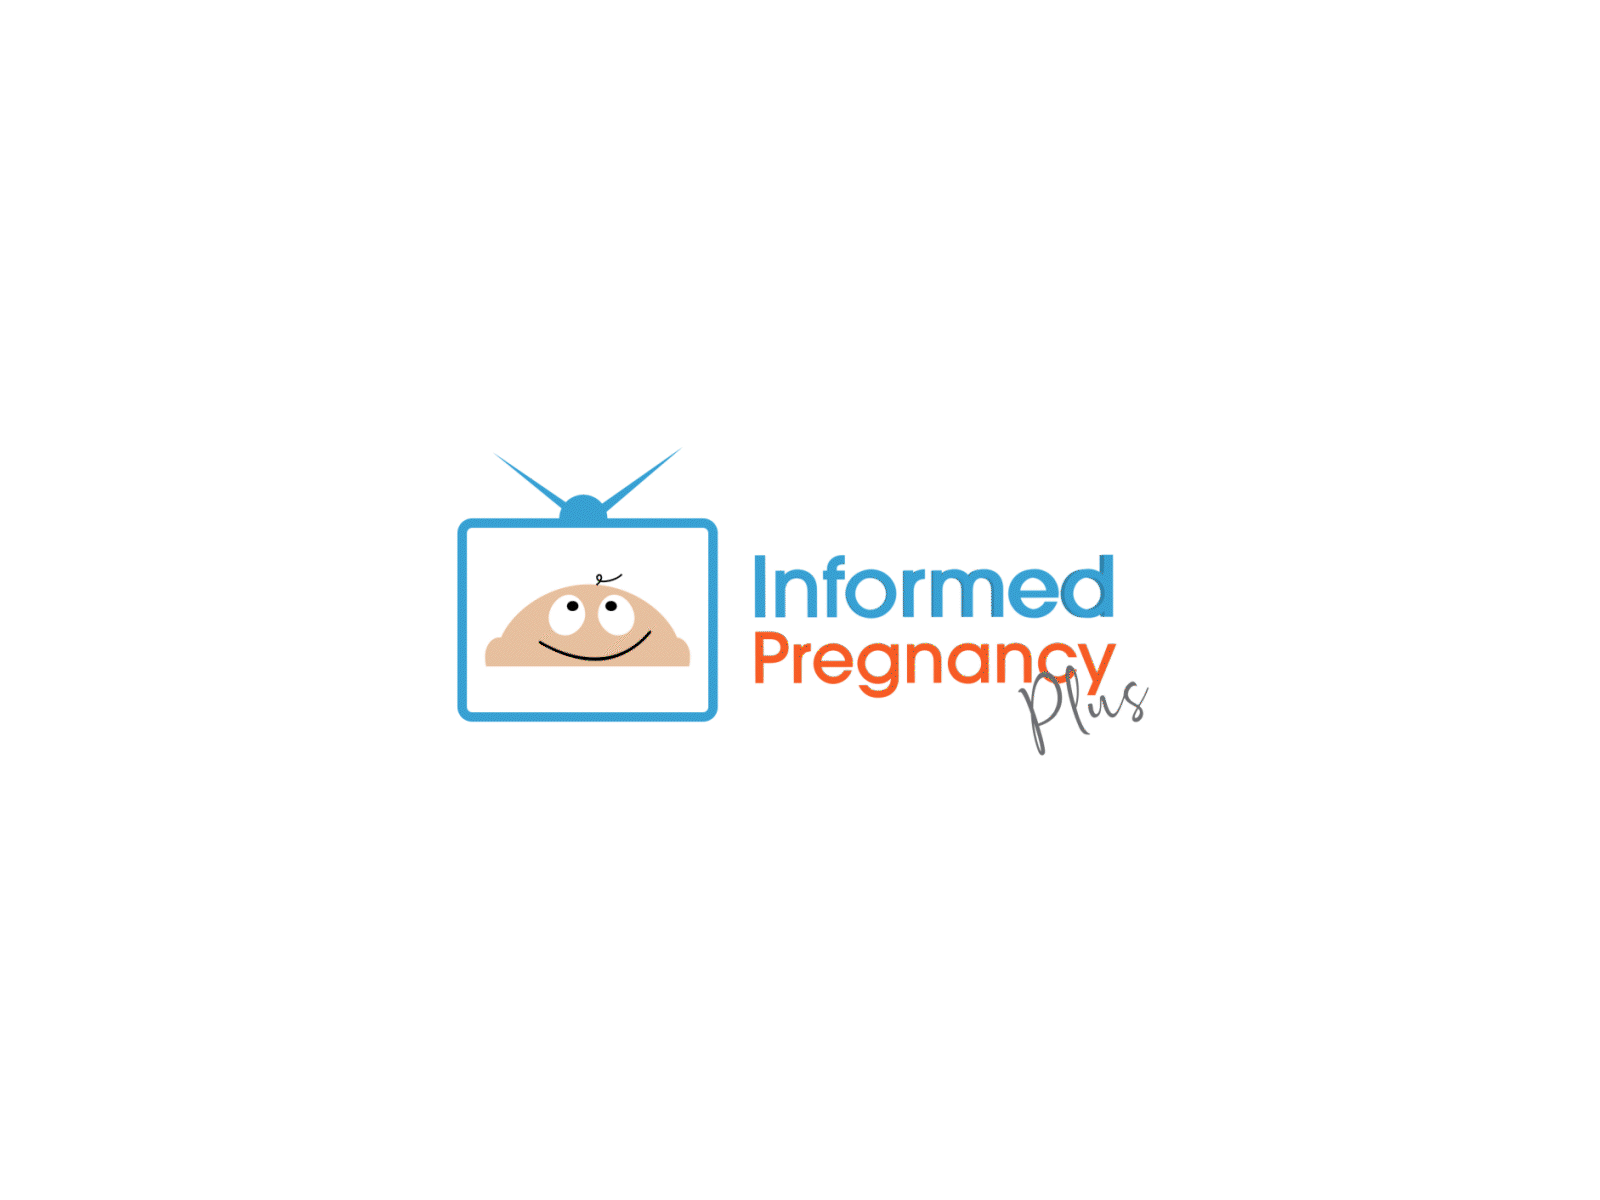 Informed Pregnancy Logo Animation